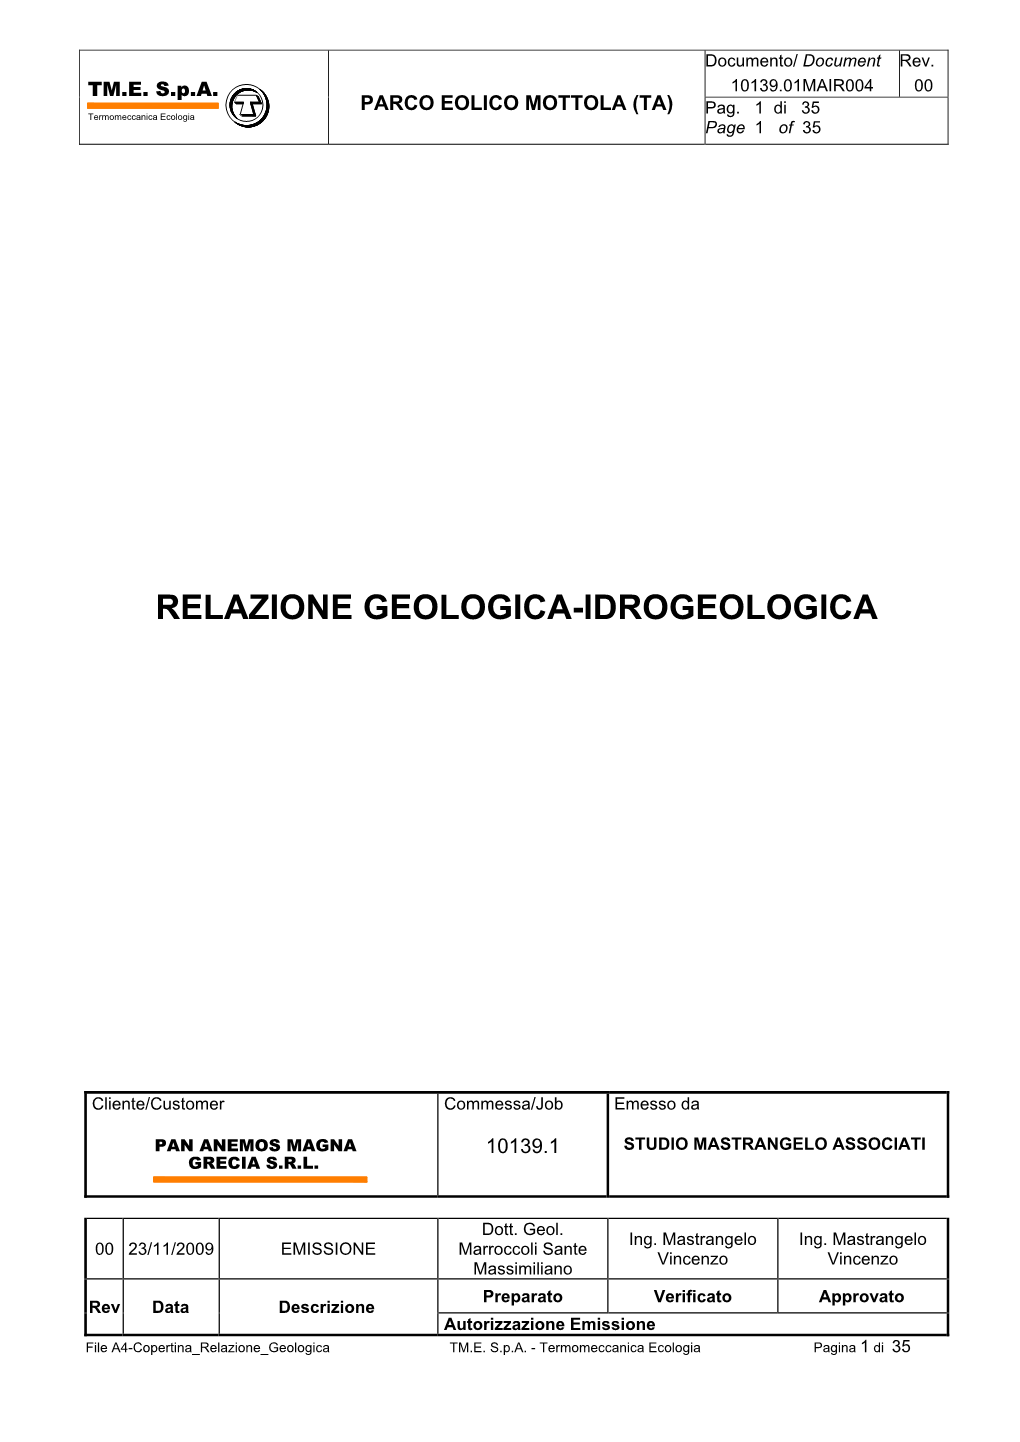 Relazione Geologica-Idrogeologica